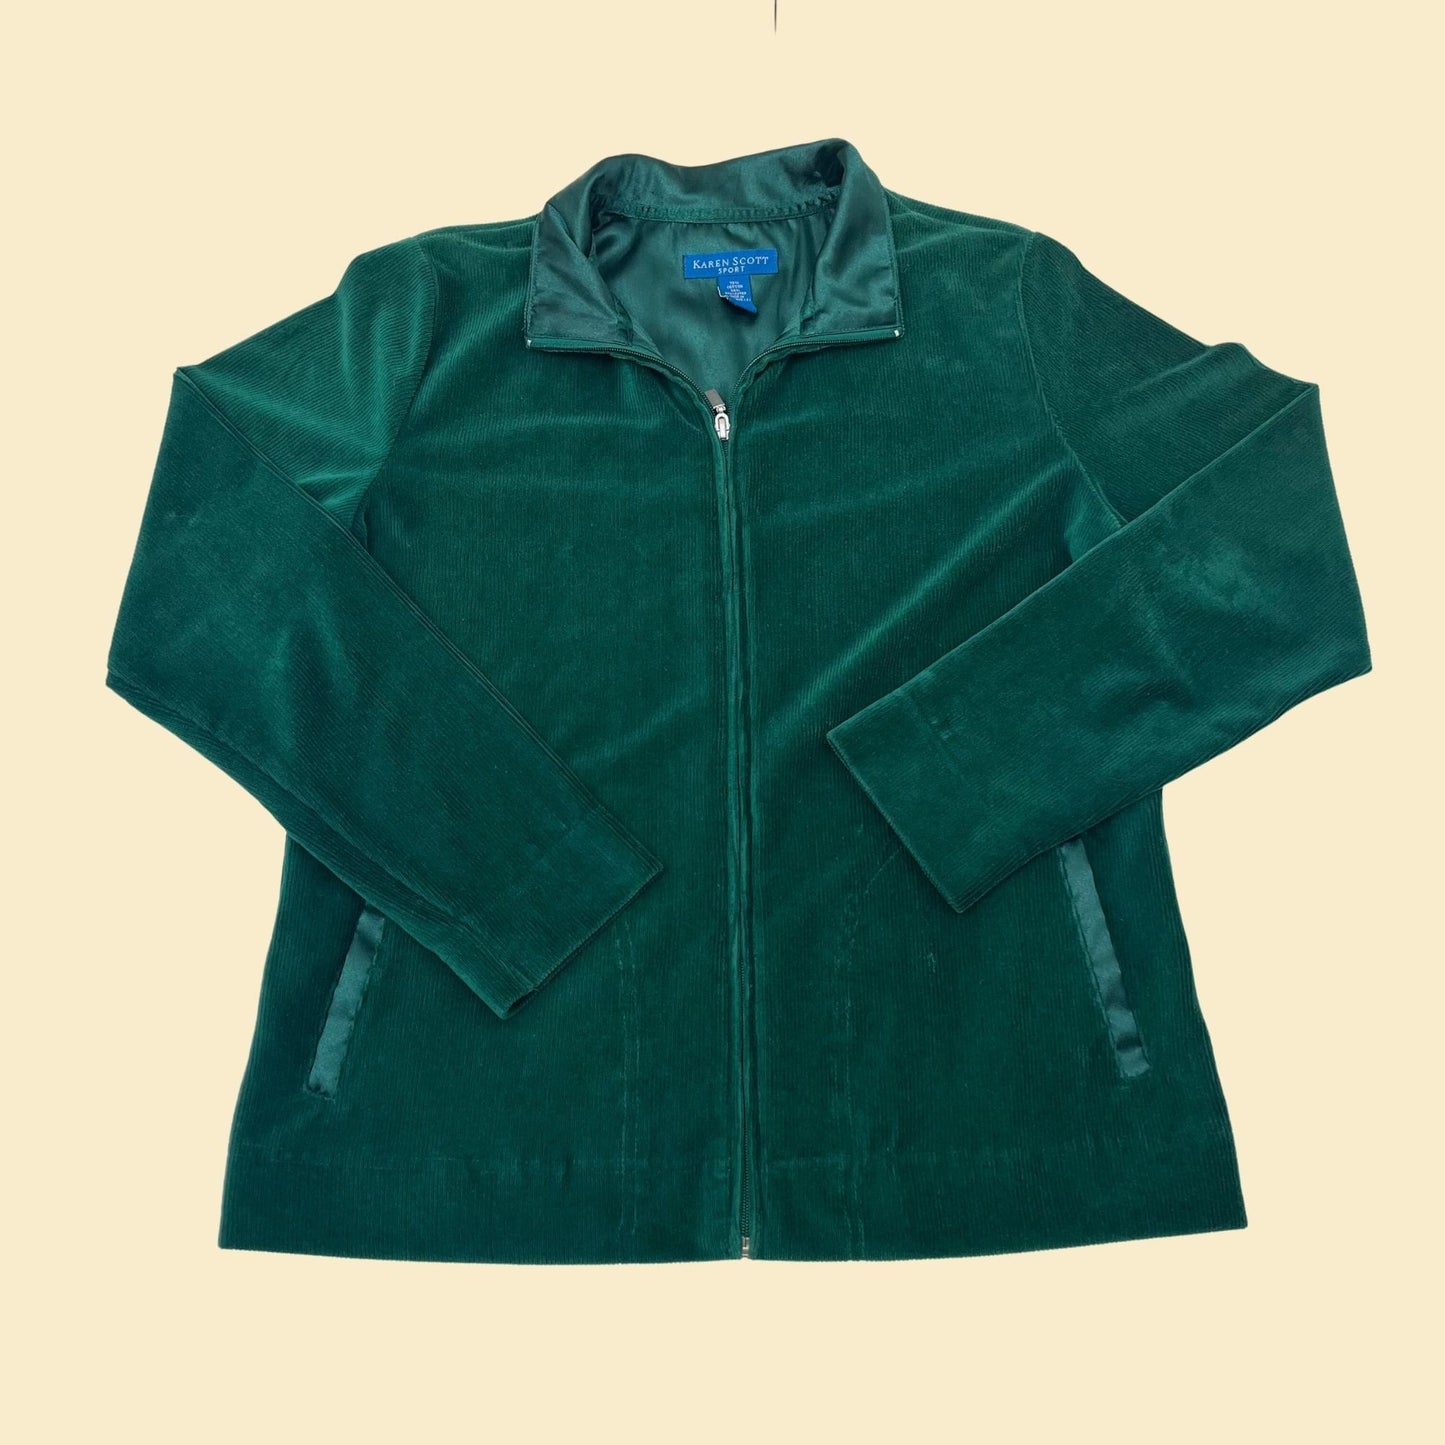 90s green velour jacket by Karen Scott sport, vintage velour track jacket with pockets, 1990s women's lightweight zip up